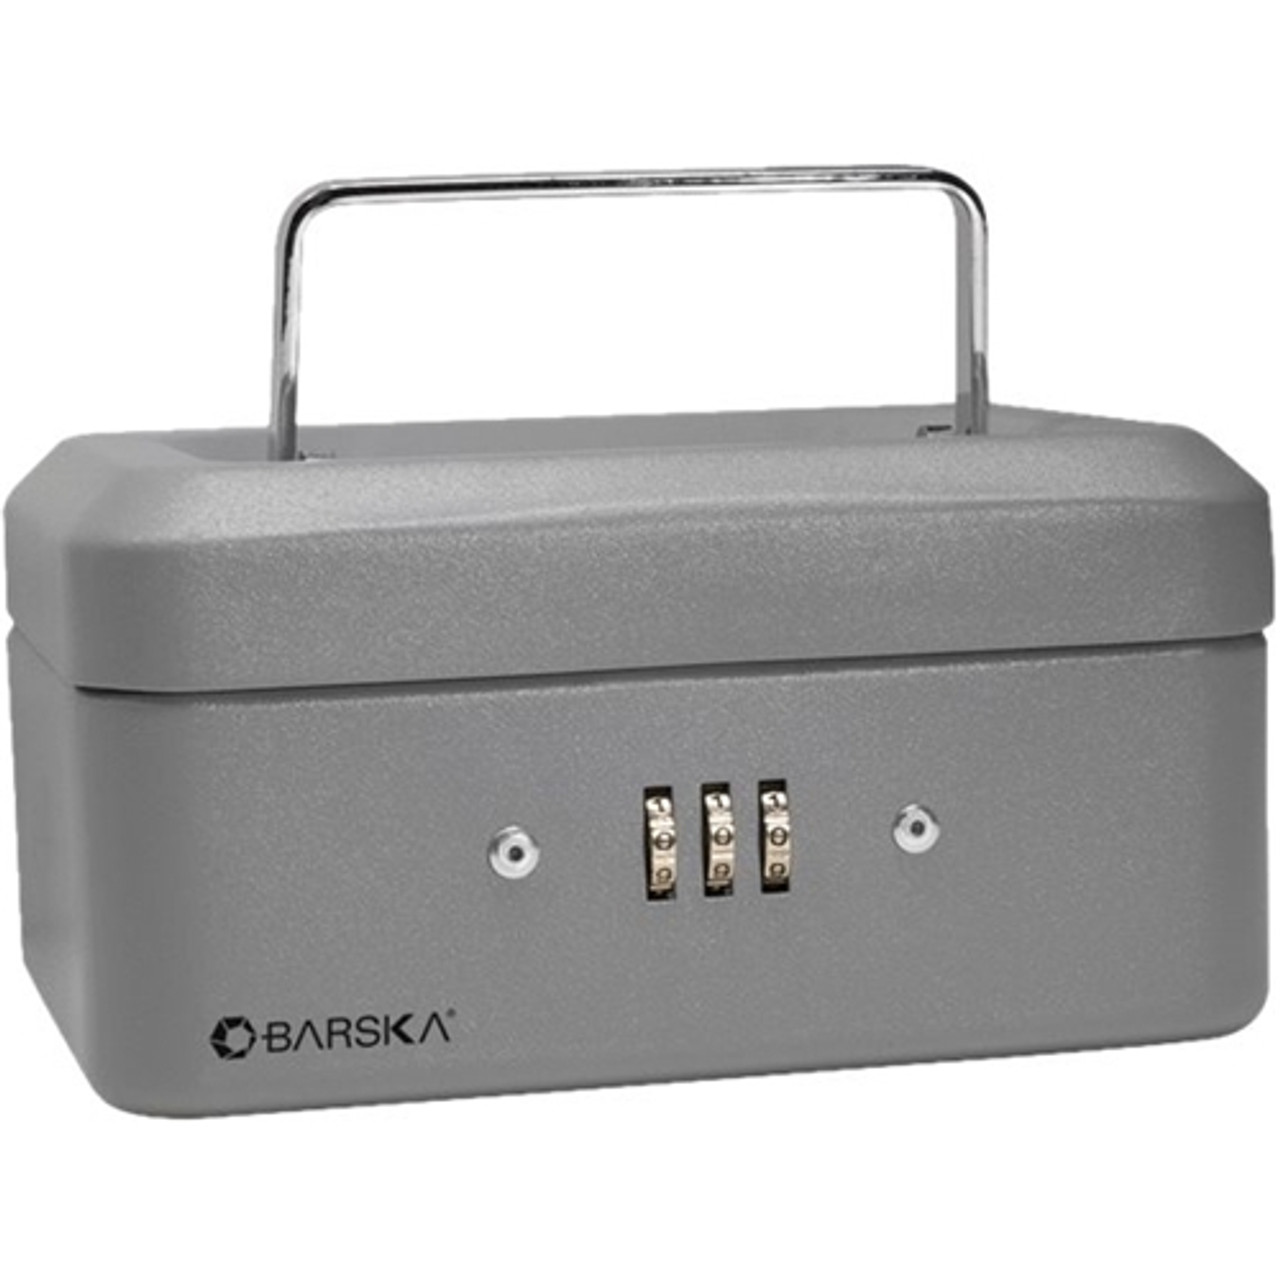 Barska - Cash Box with Combination Lock - Black